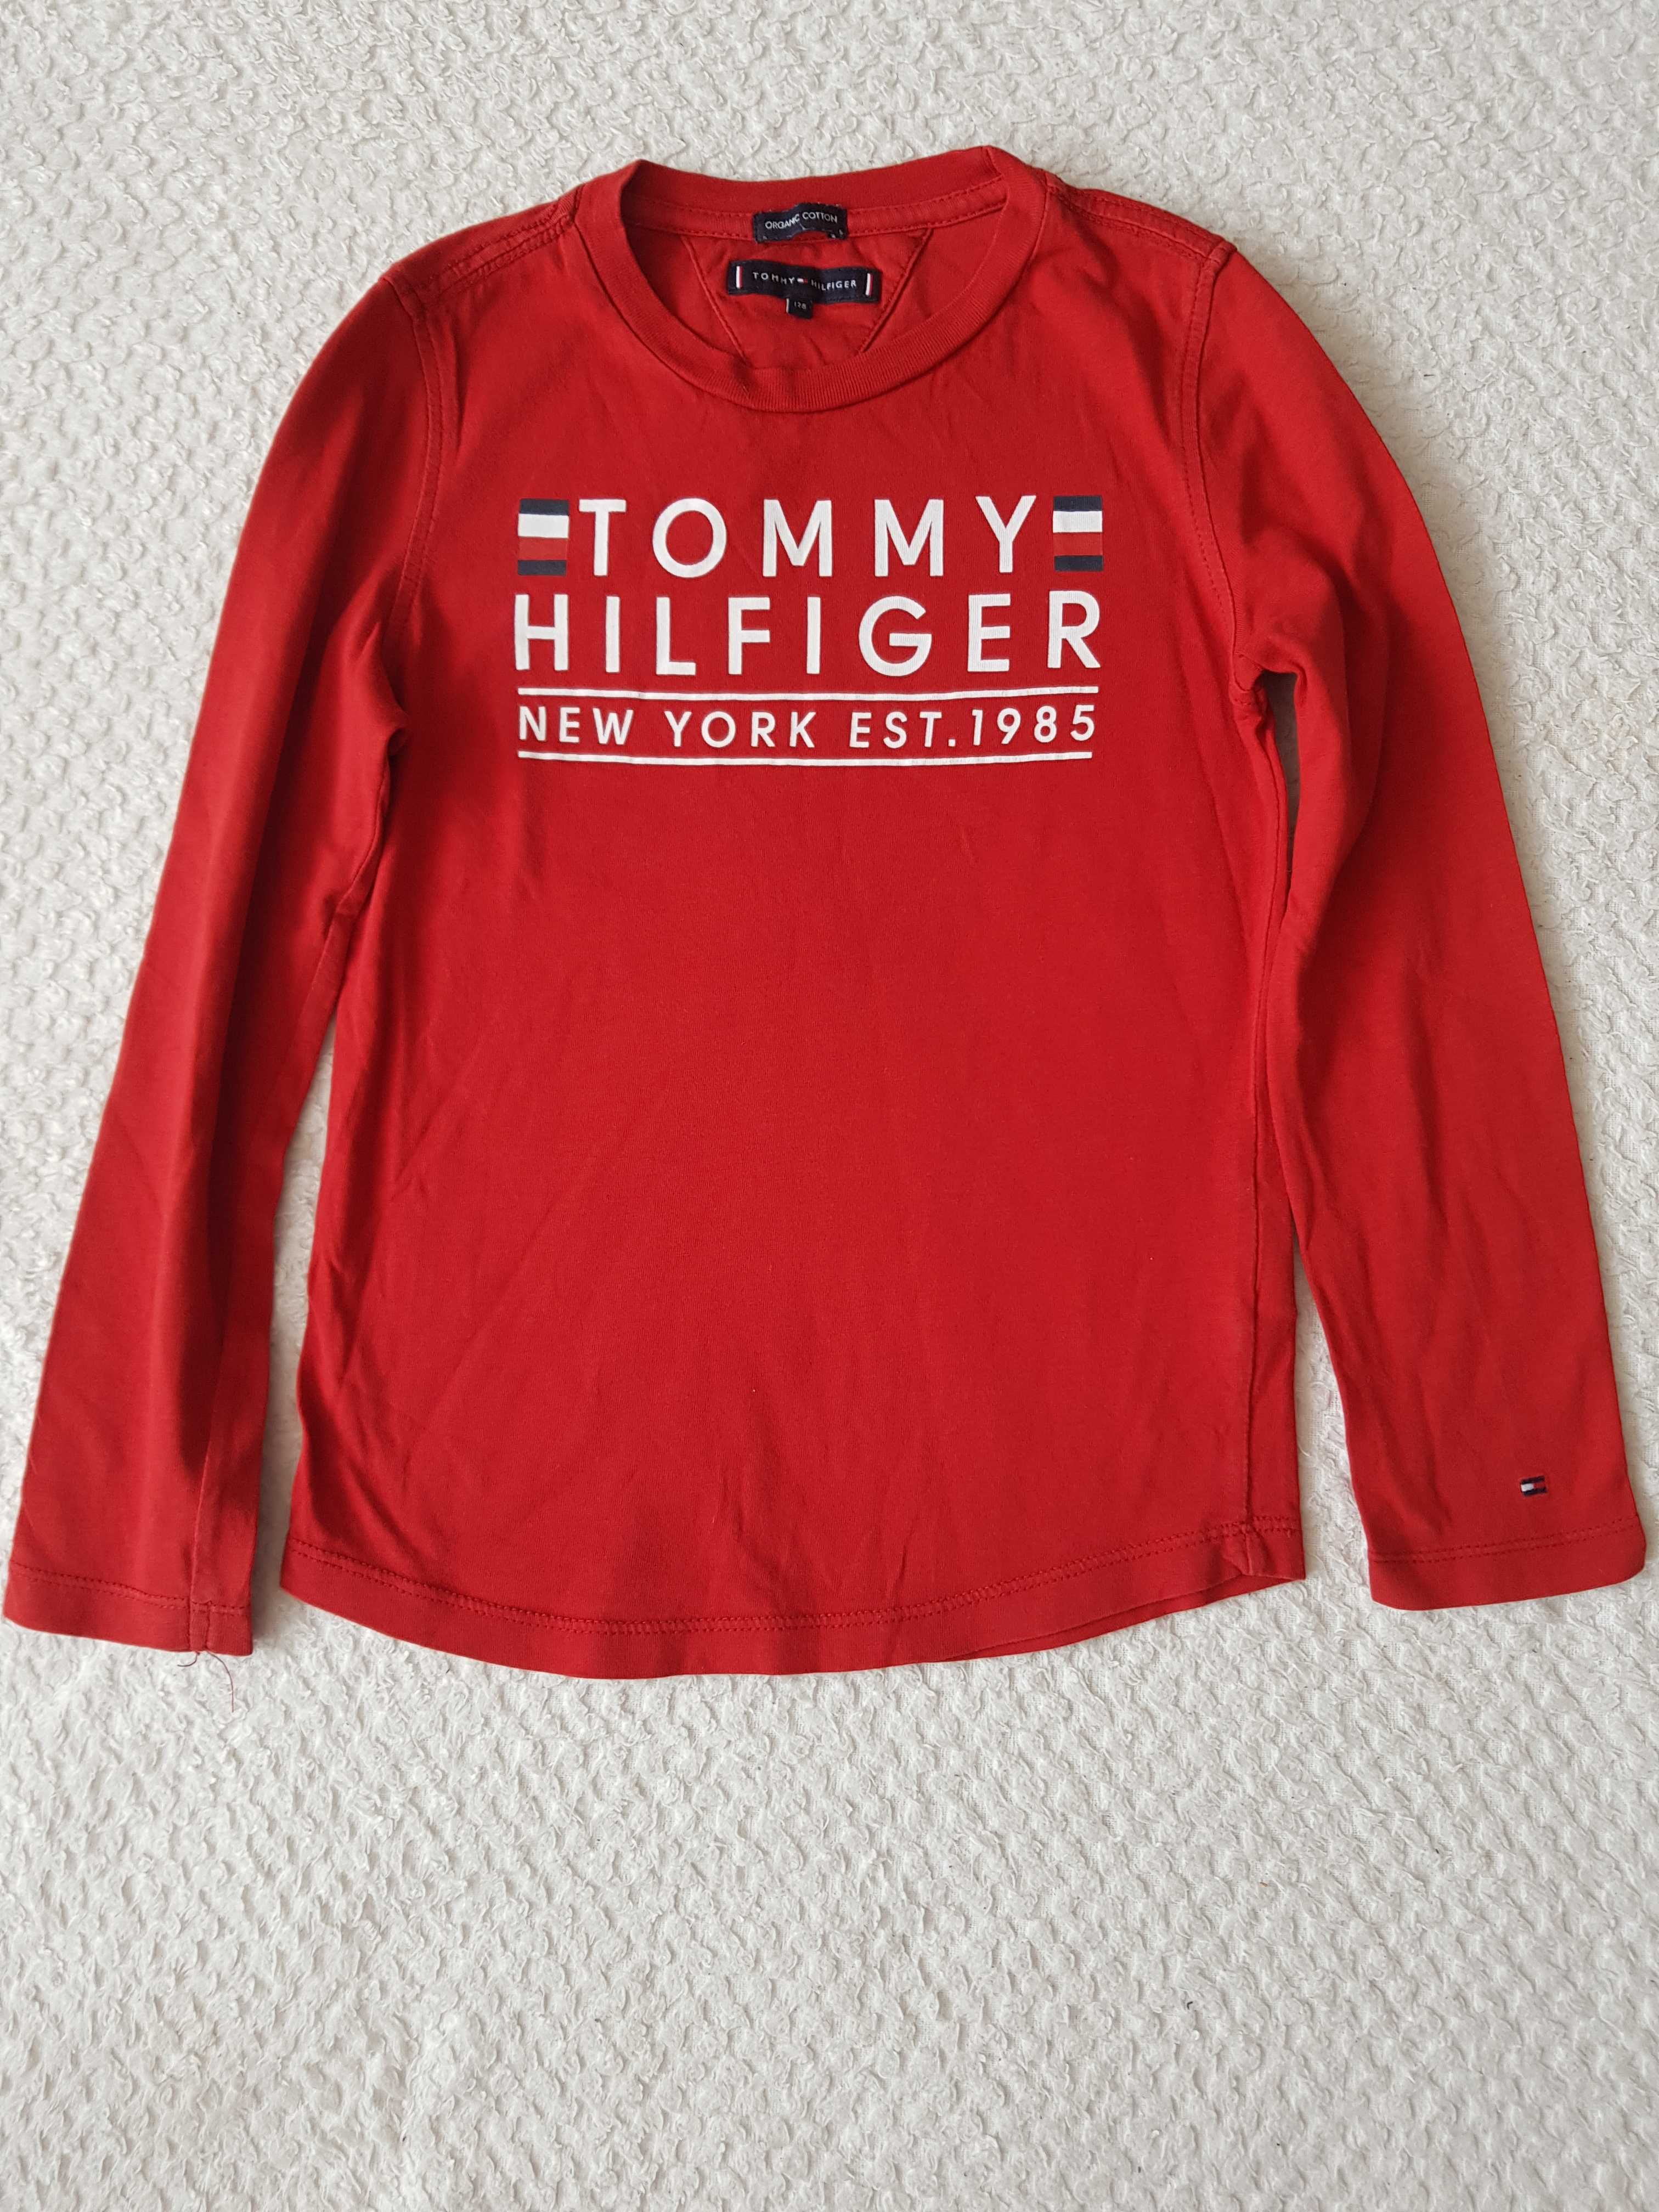 Bluzka Tommy Hilfiger rozmiar 128 cm